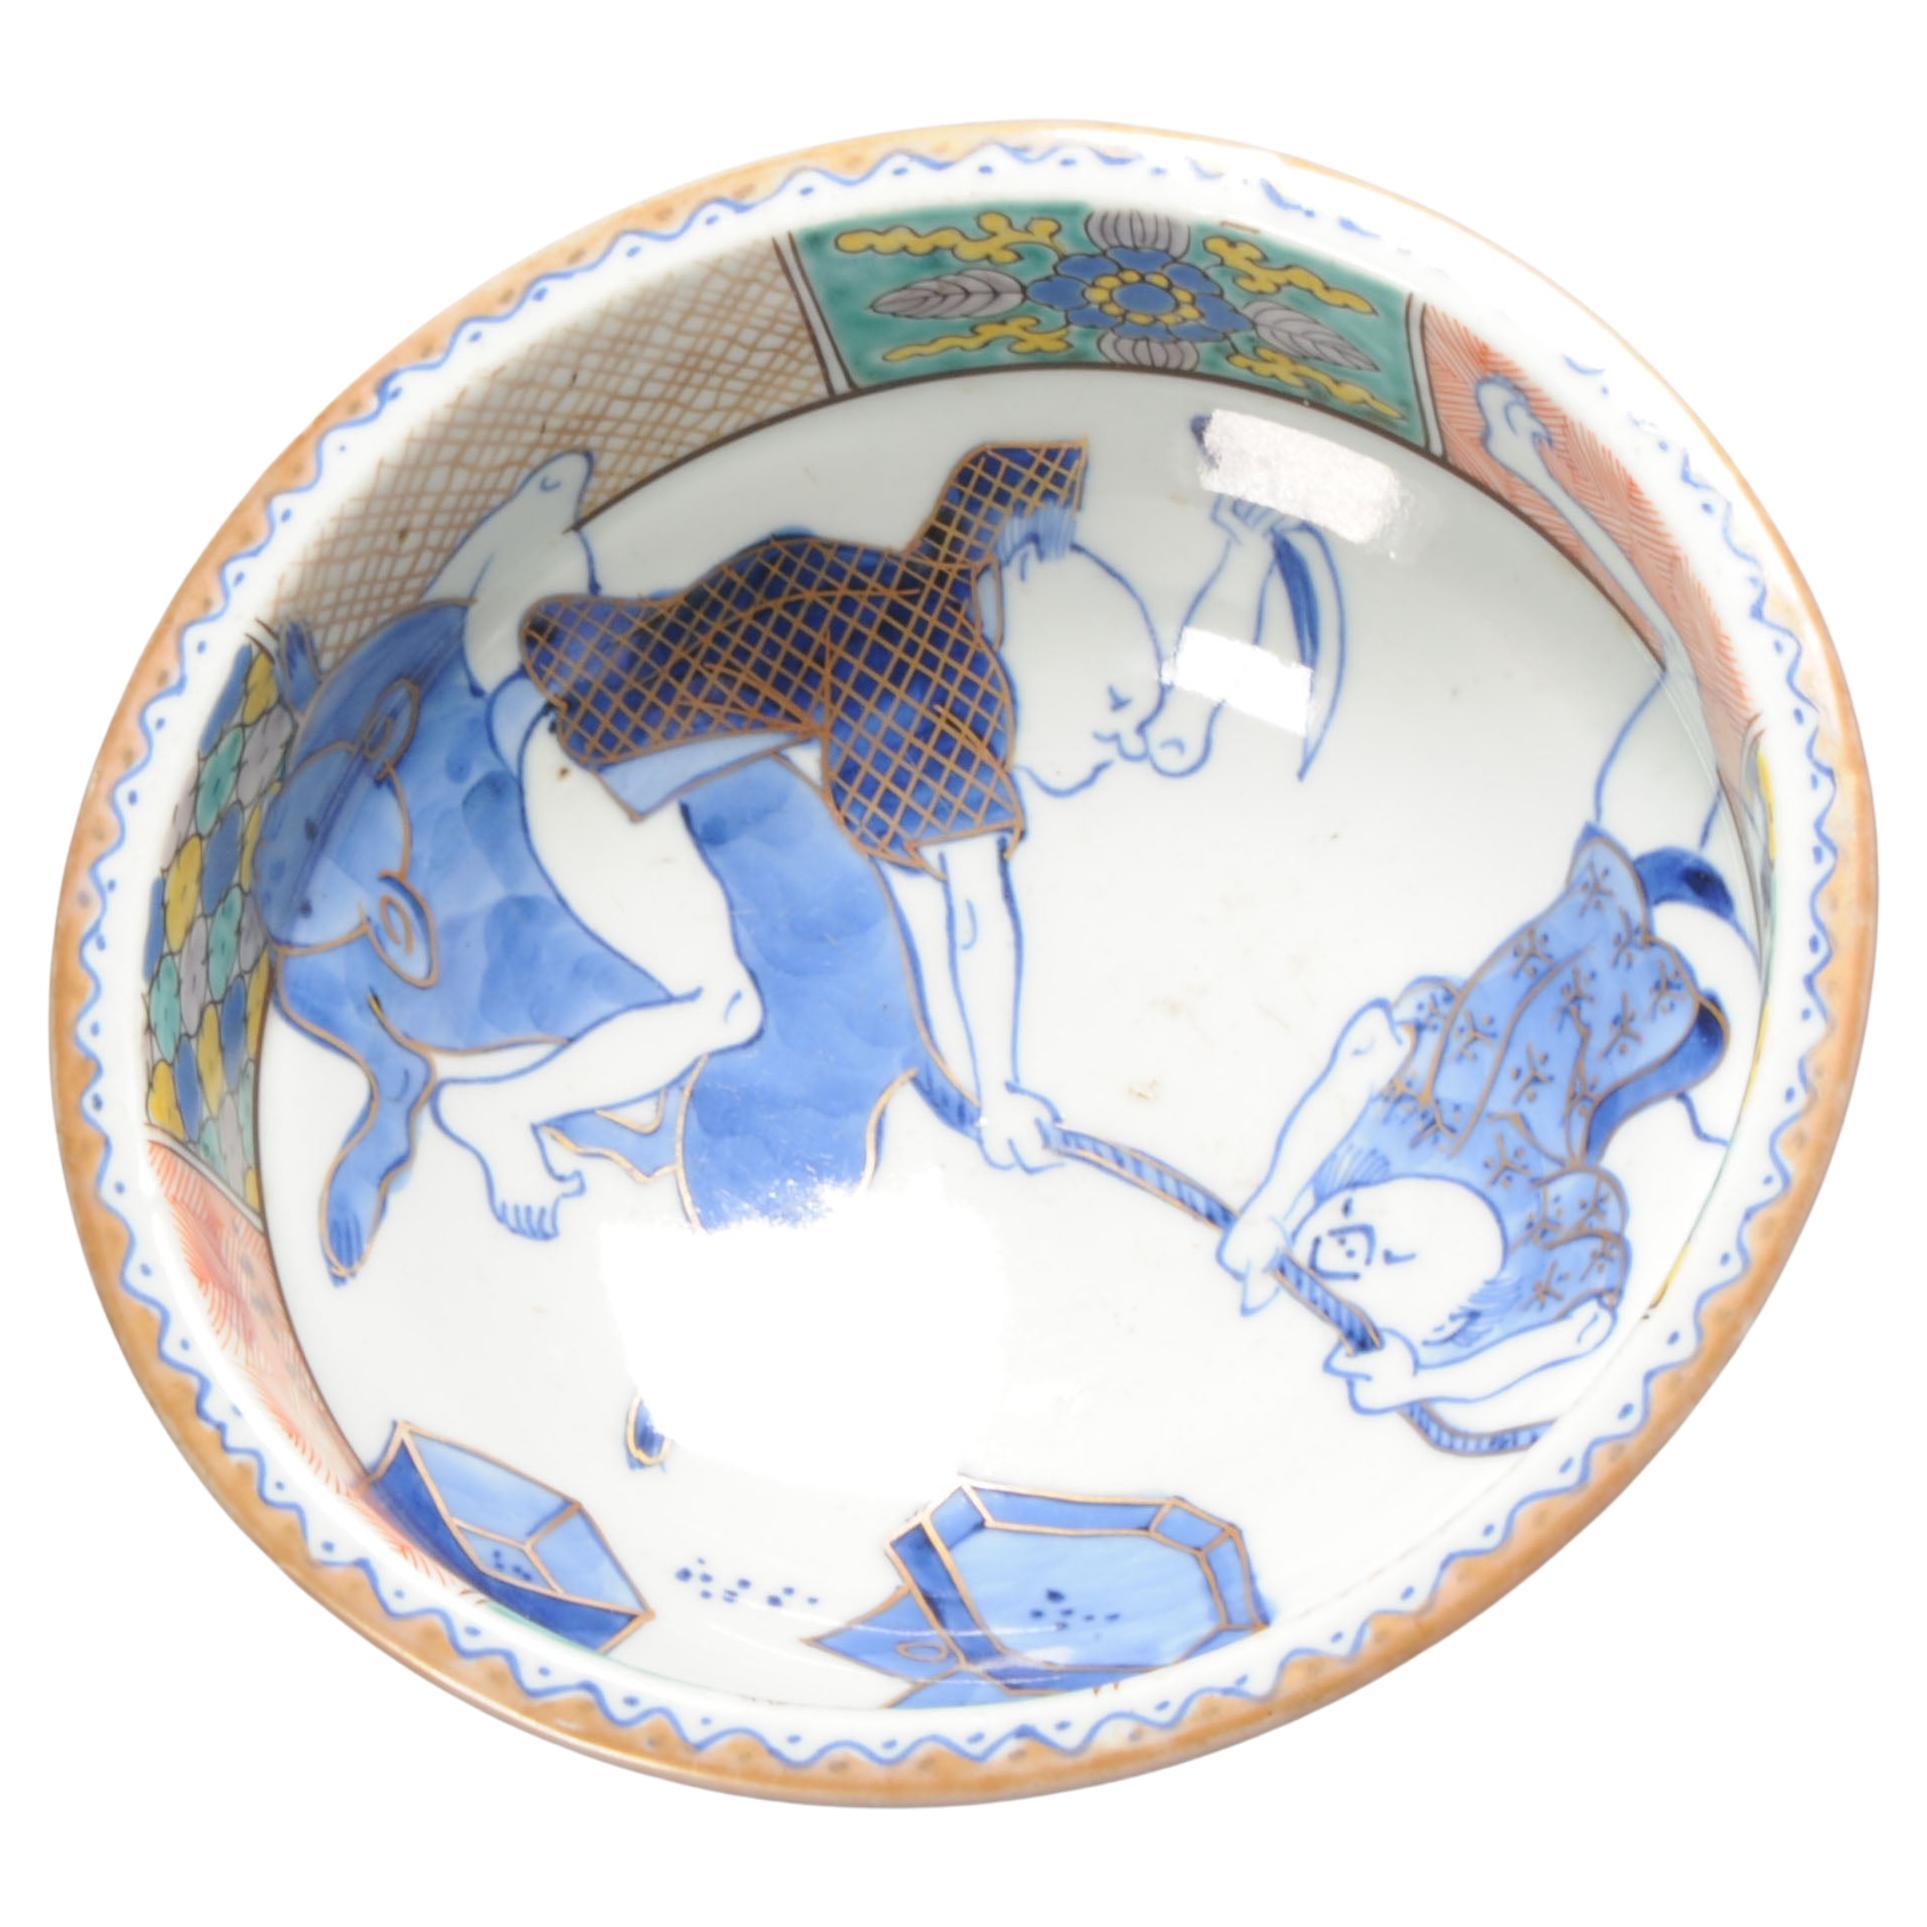 Antique Edo Period Arita Rat Catcher Japanese Porcelain Sake Washer with Figures